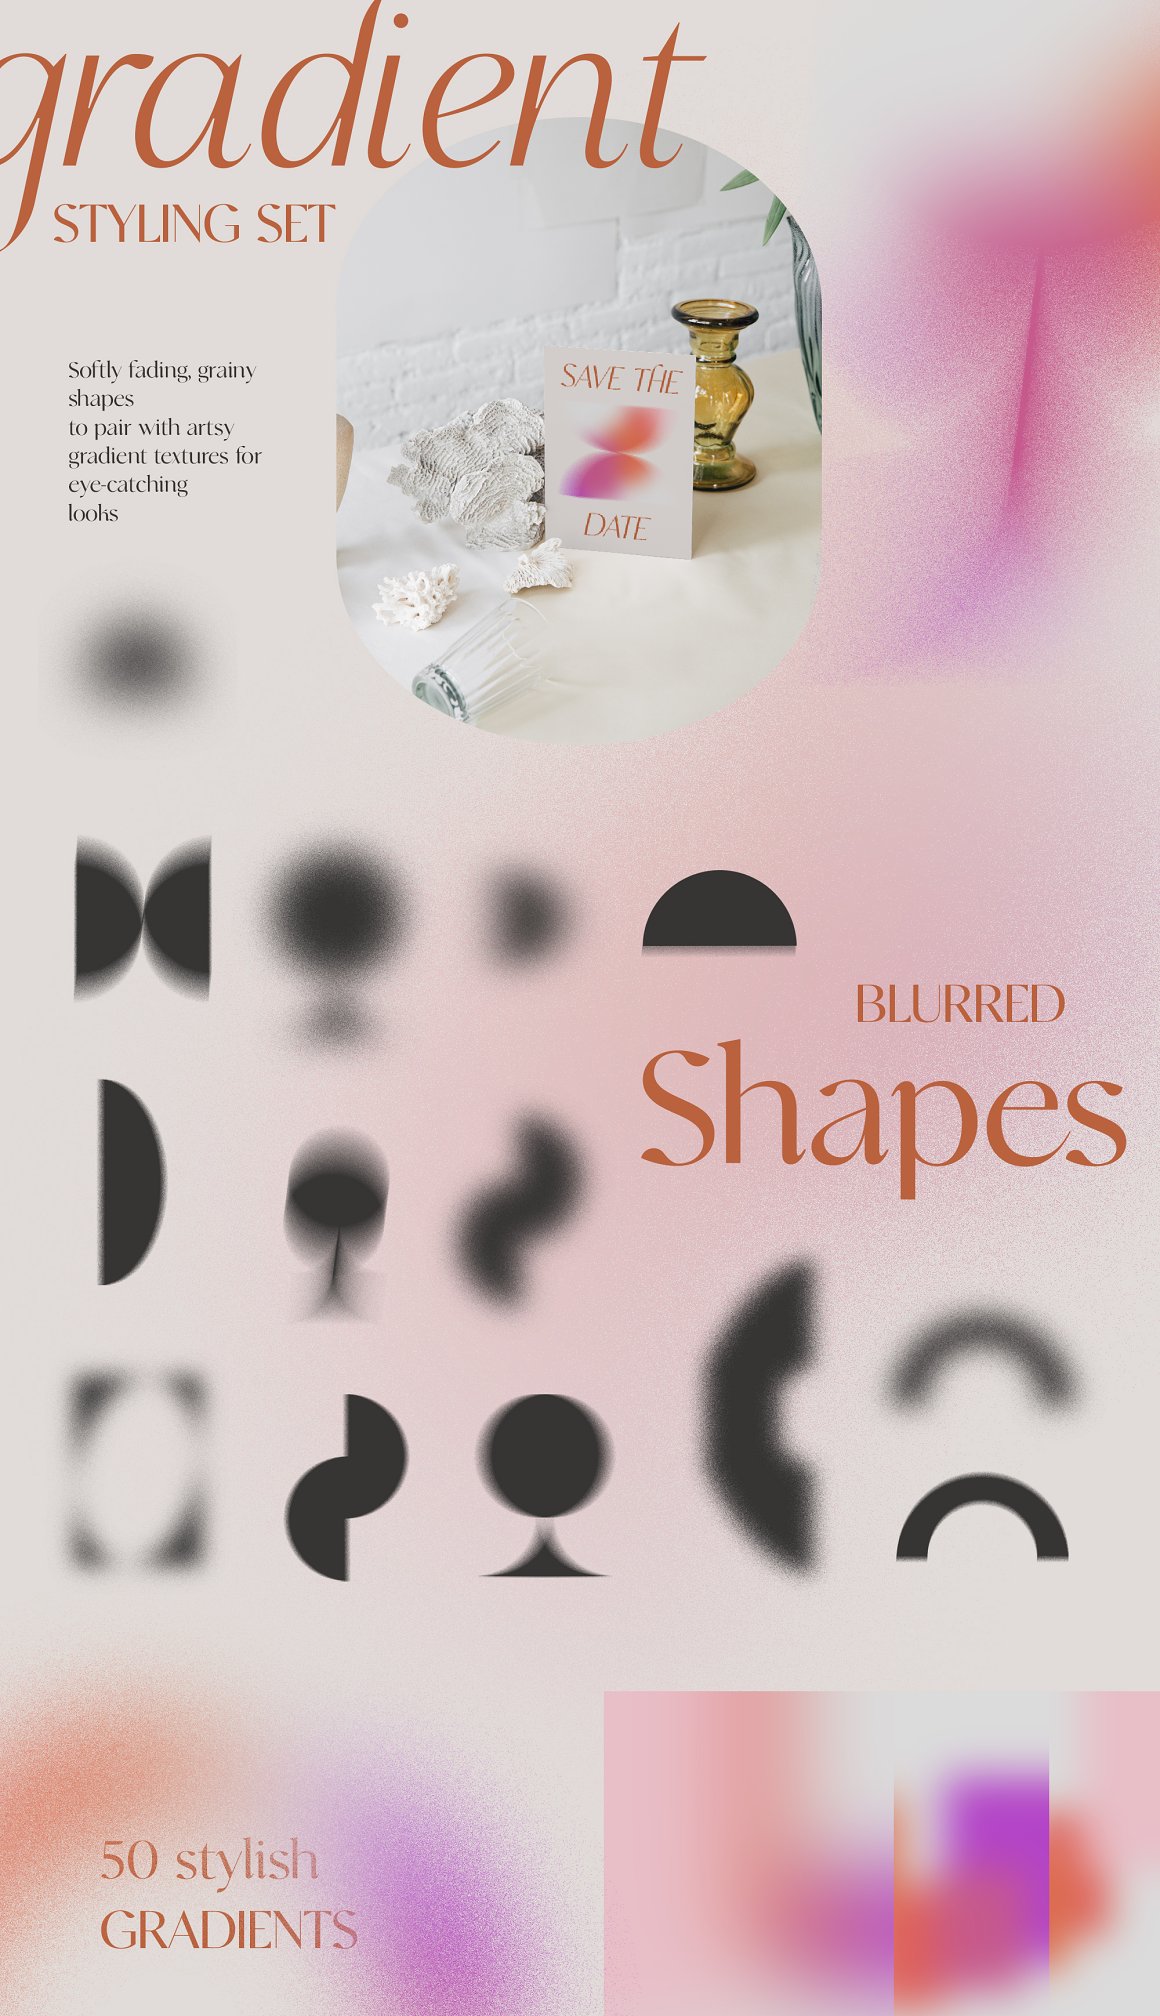 LARAS 抽象几何扭曲彩色渐变纹理拼贴元素海报设计背景PNG素材 Gradient Texture Collage Bundle 图片素材 第6张